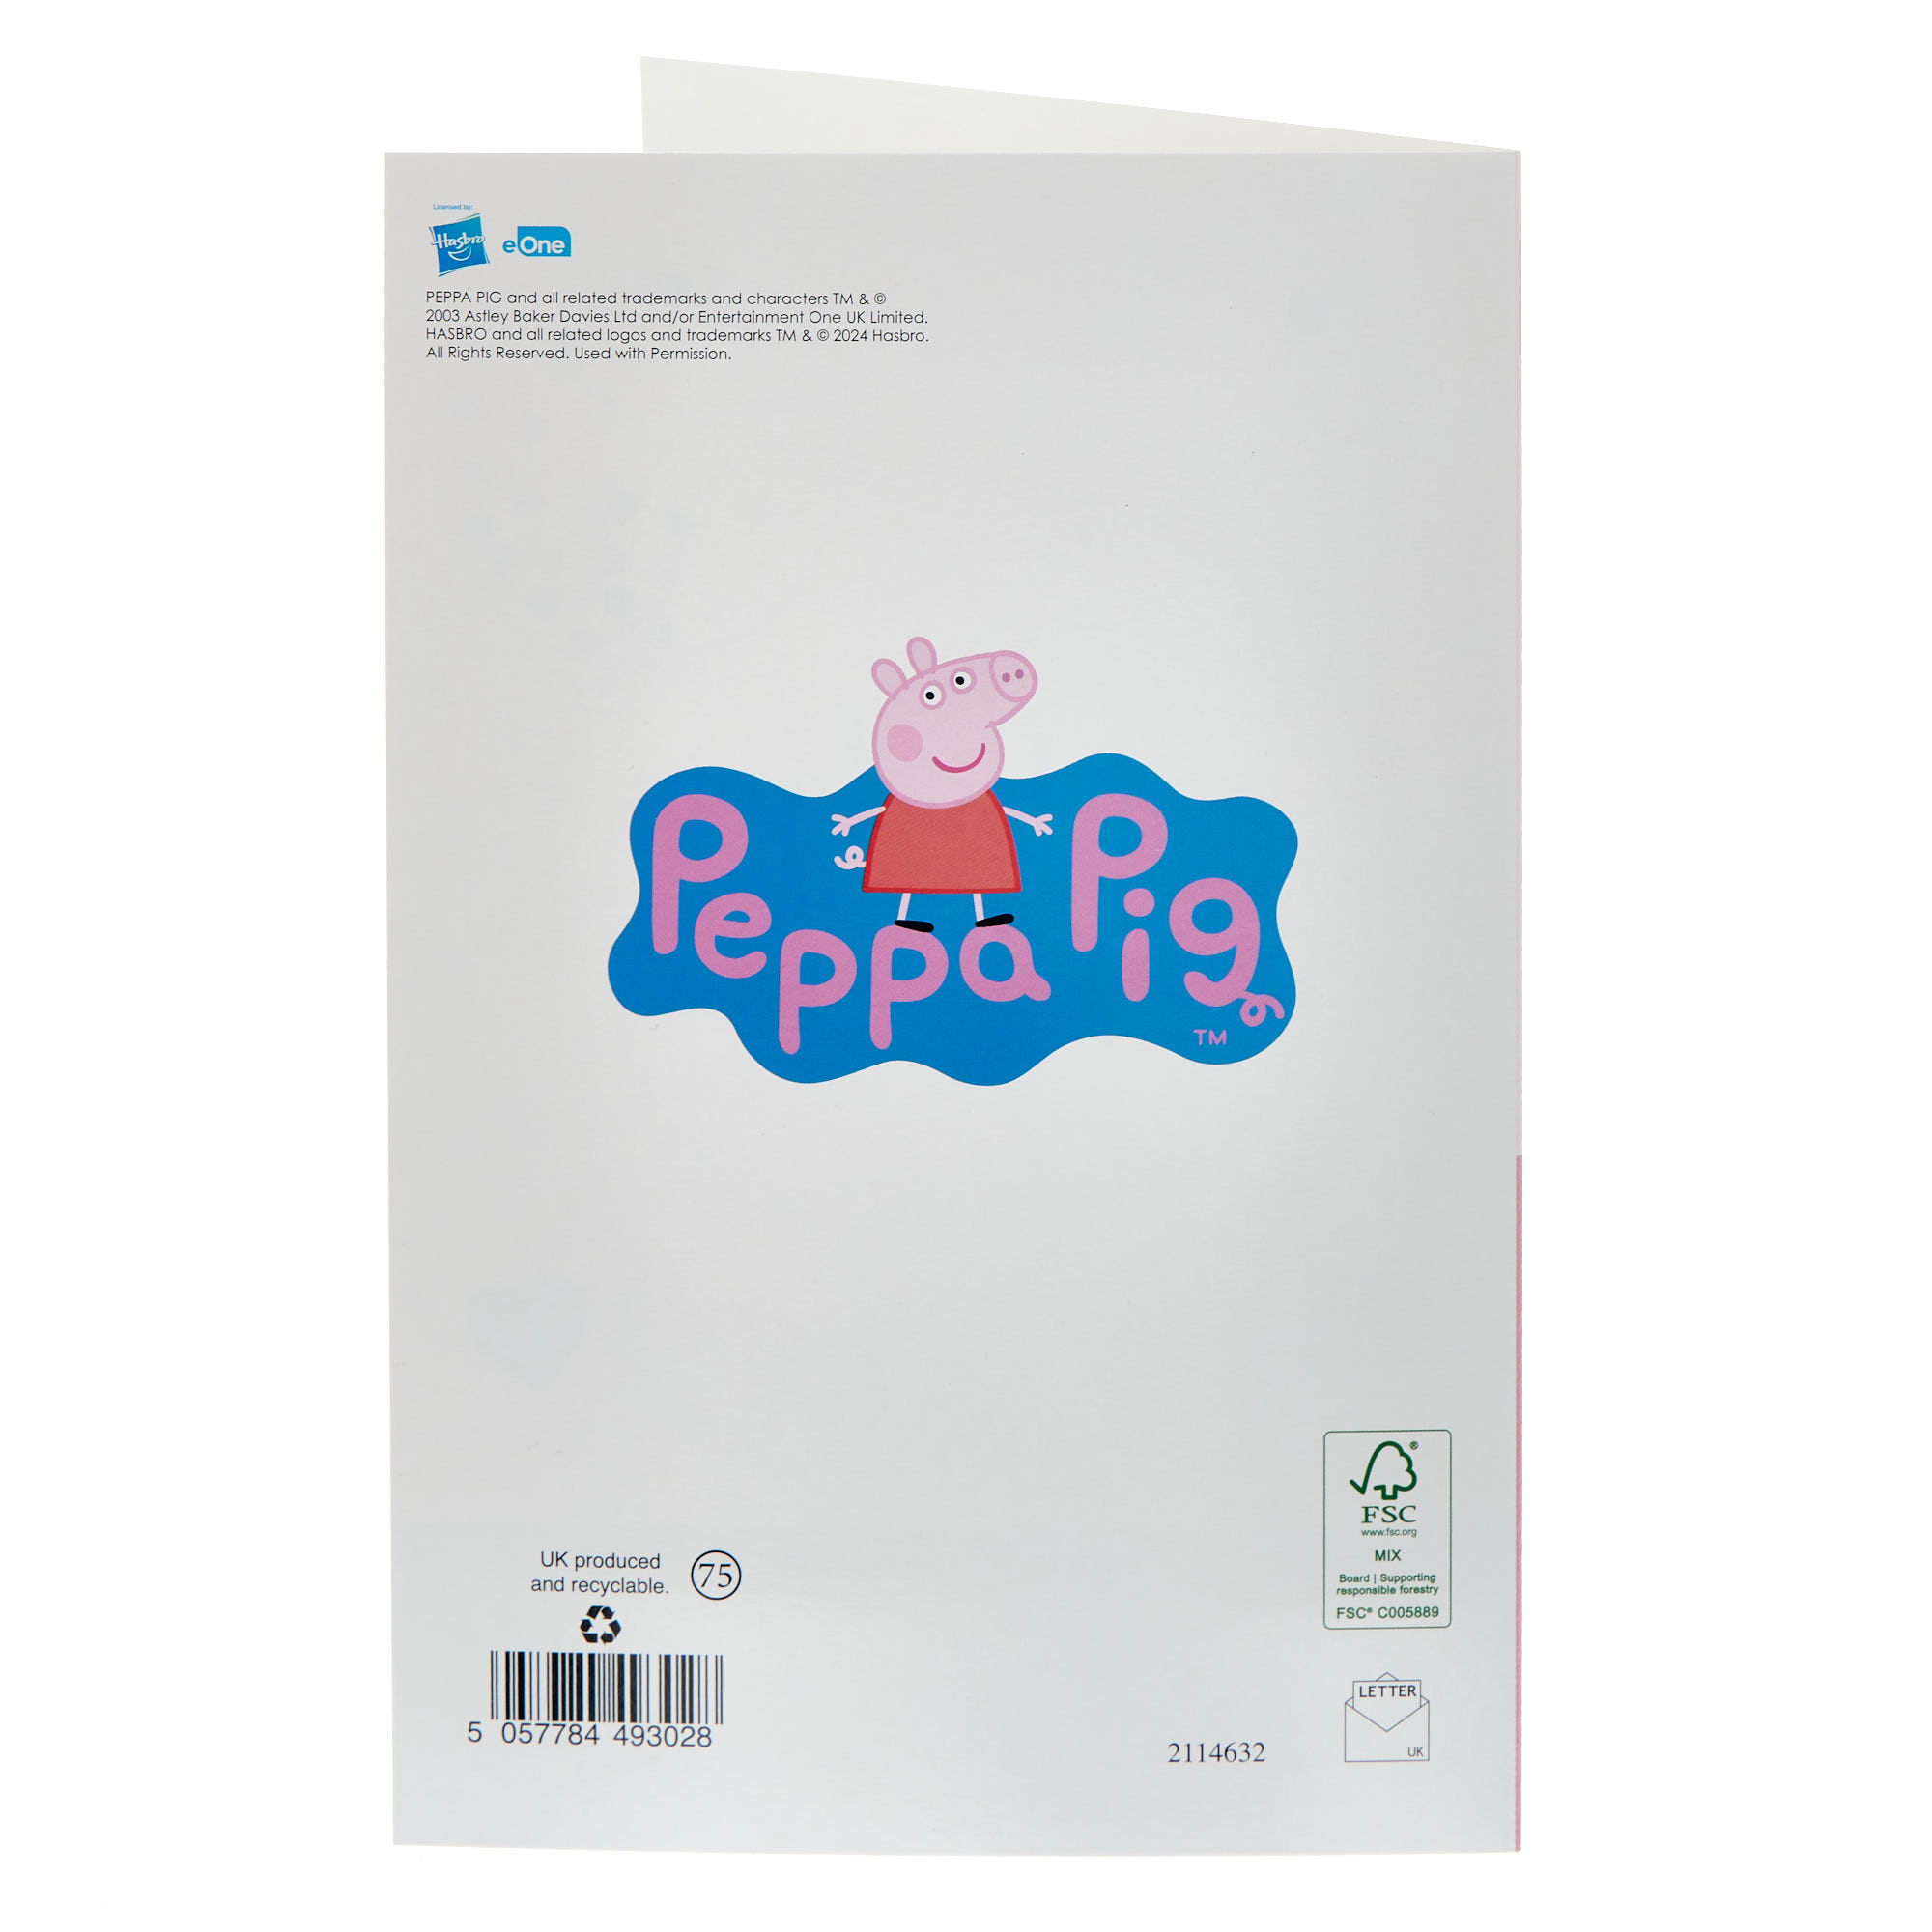 Mummy Peppa Pig Valentine's Day Card